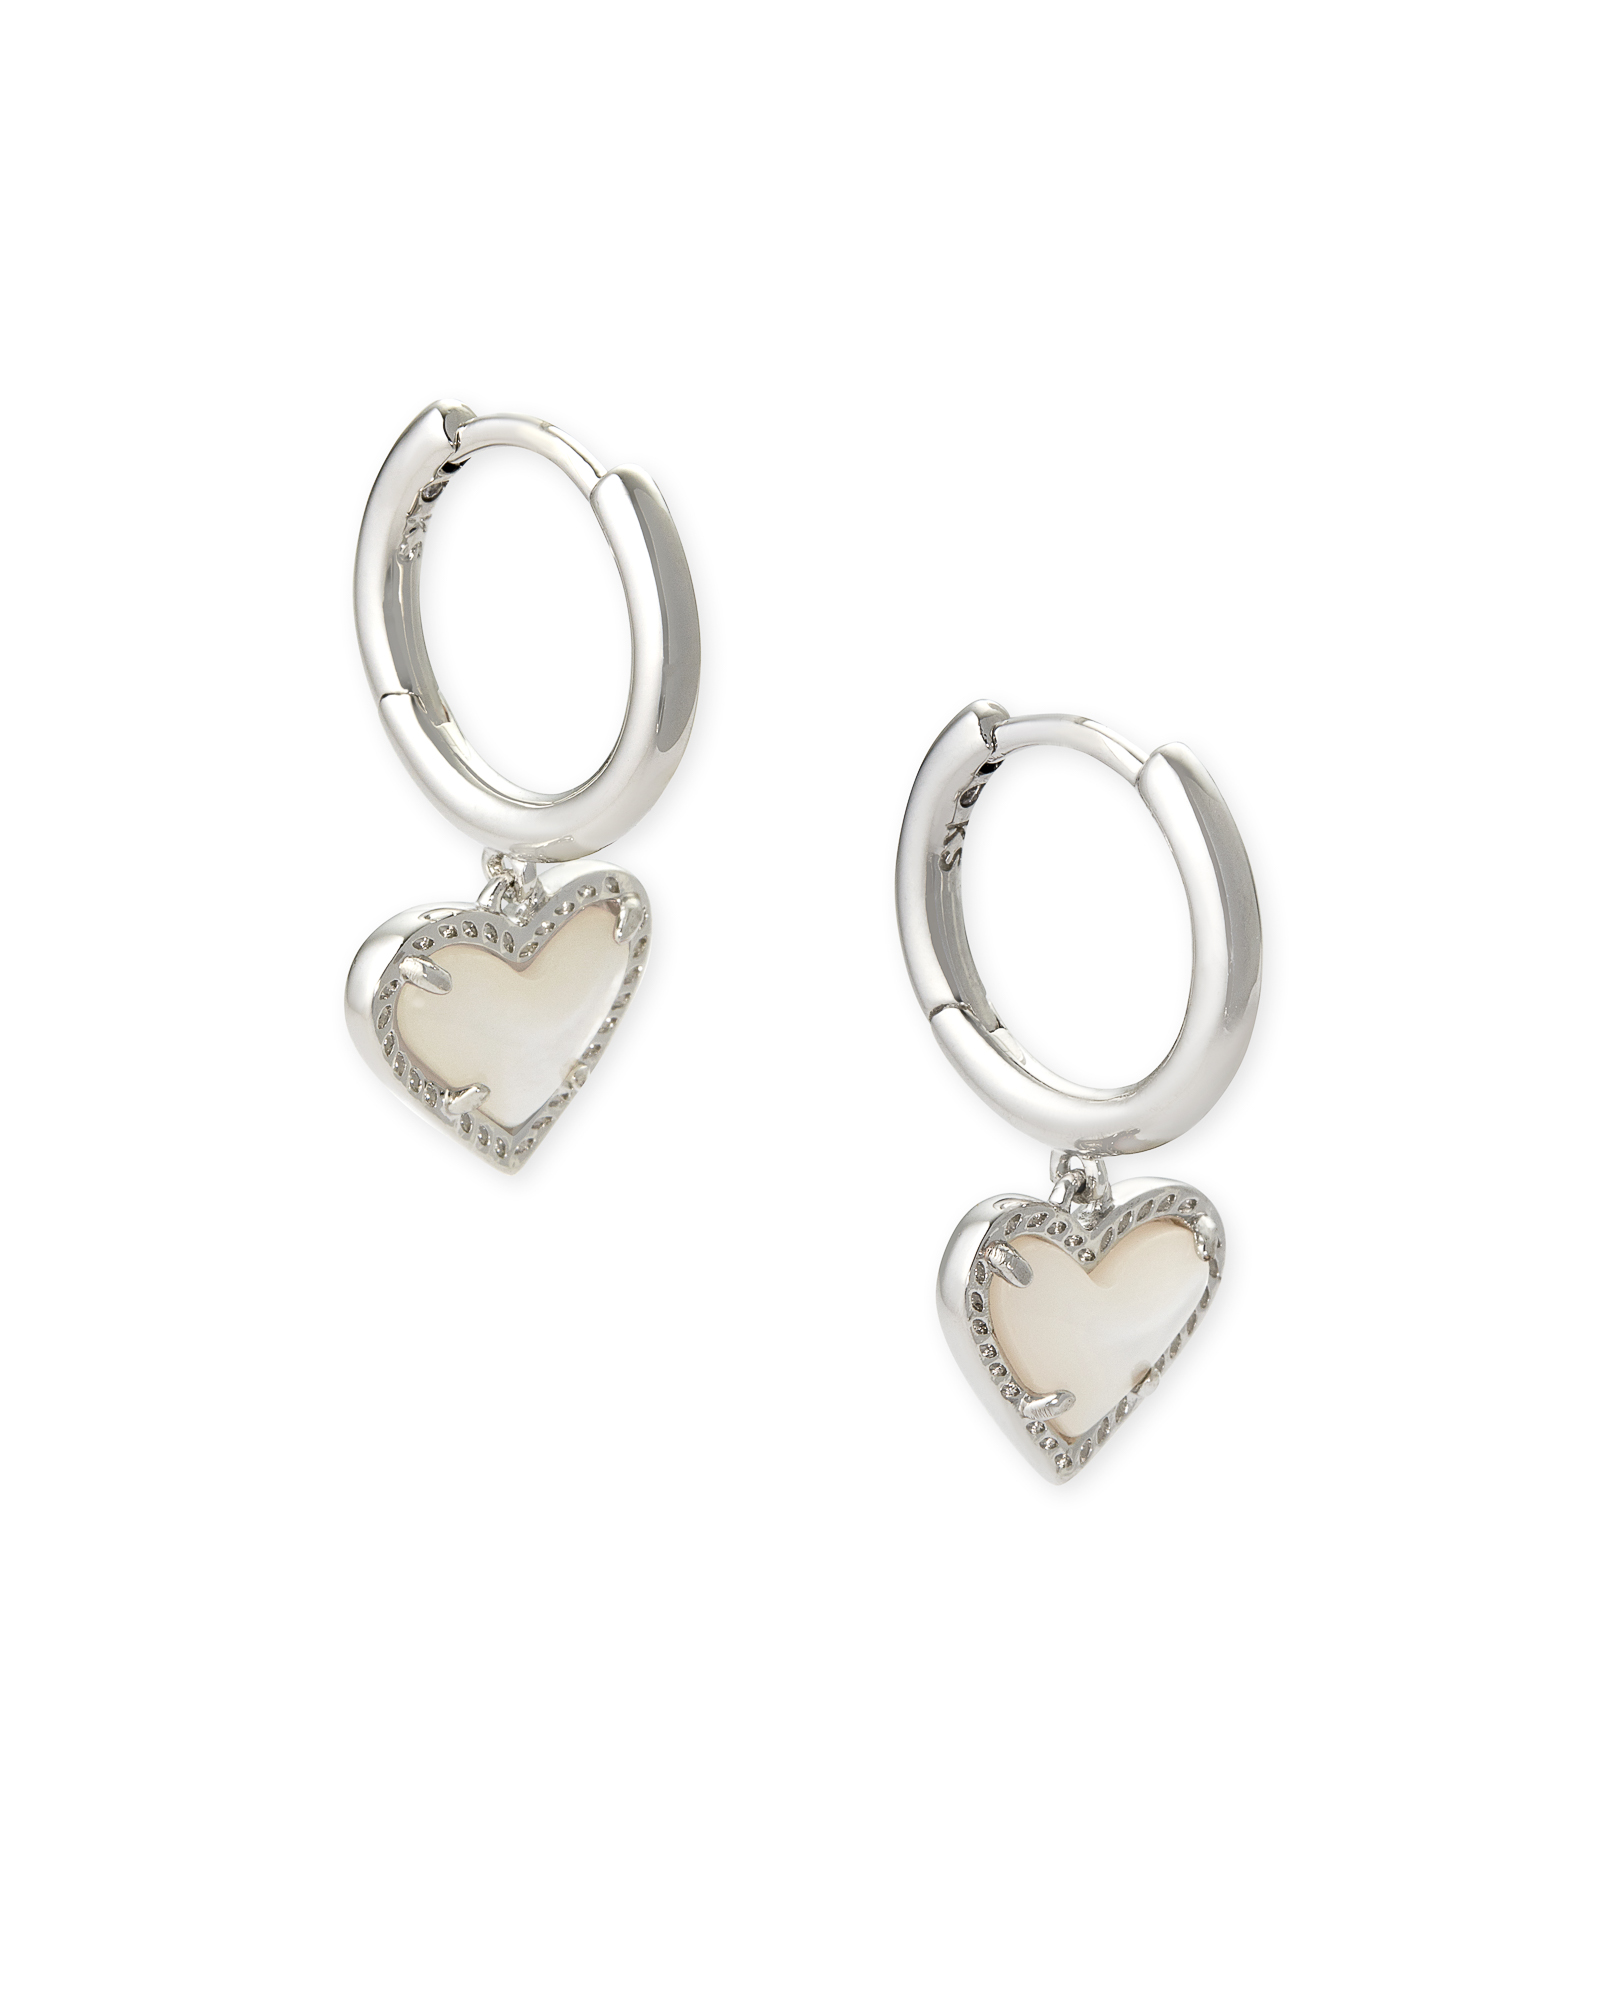 Ari Heart Silver Huggie Earrings in Ivory Mother-of-Pearl